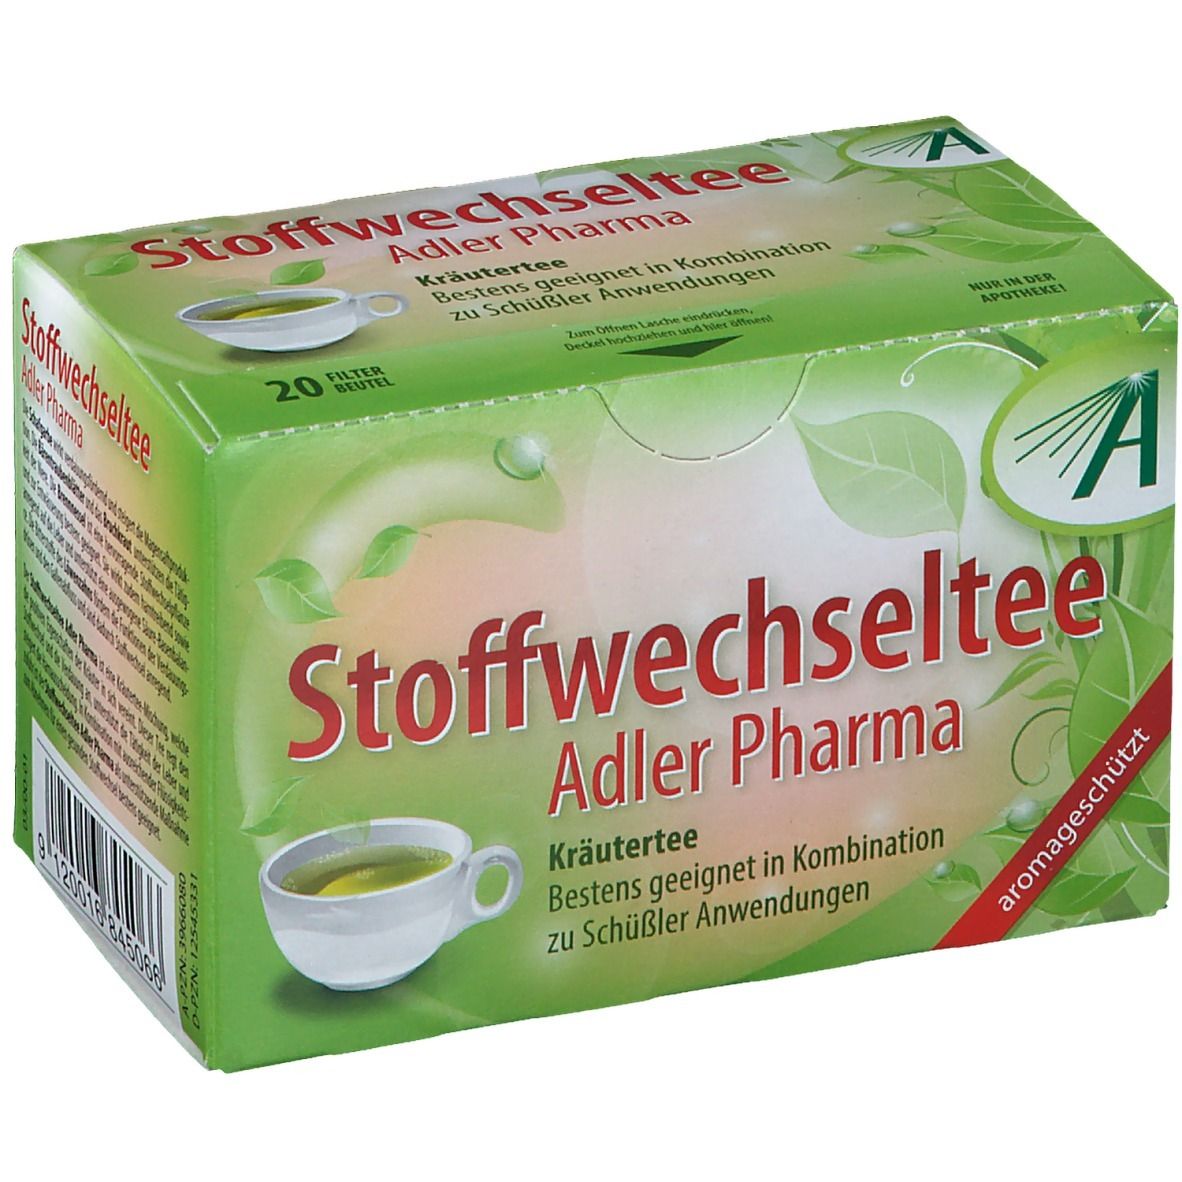 Image of Adler Pharma Stoffwechseltee